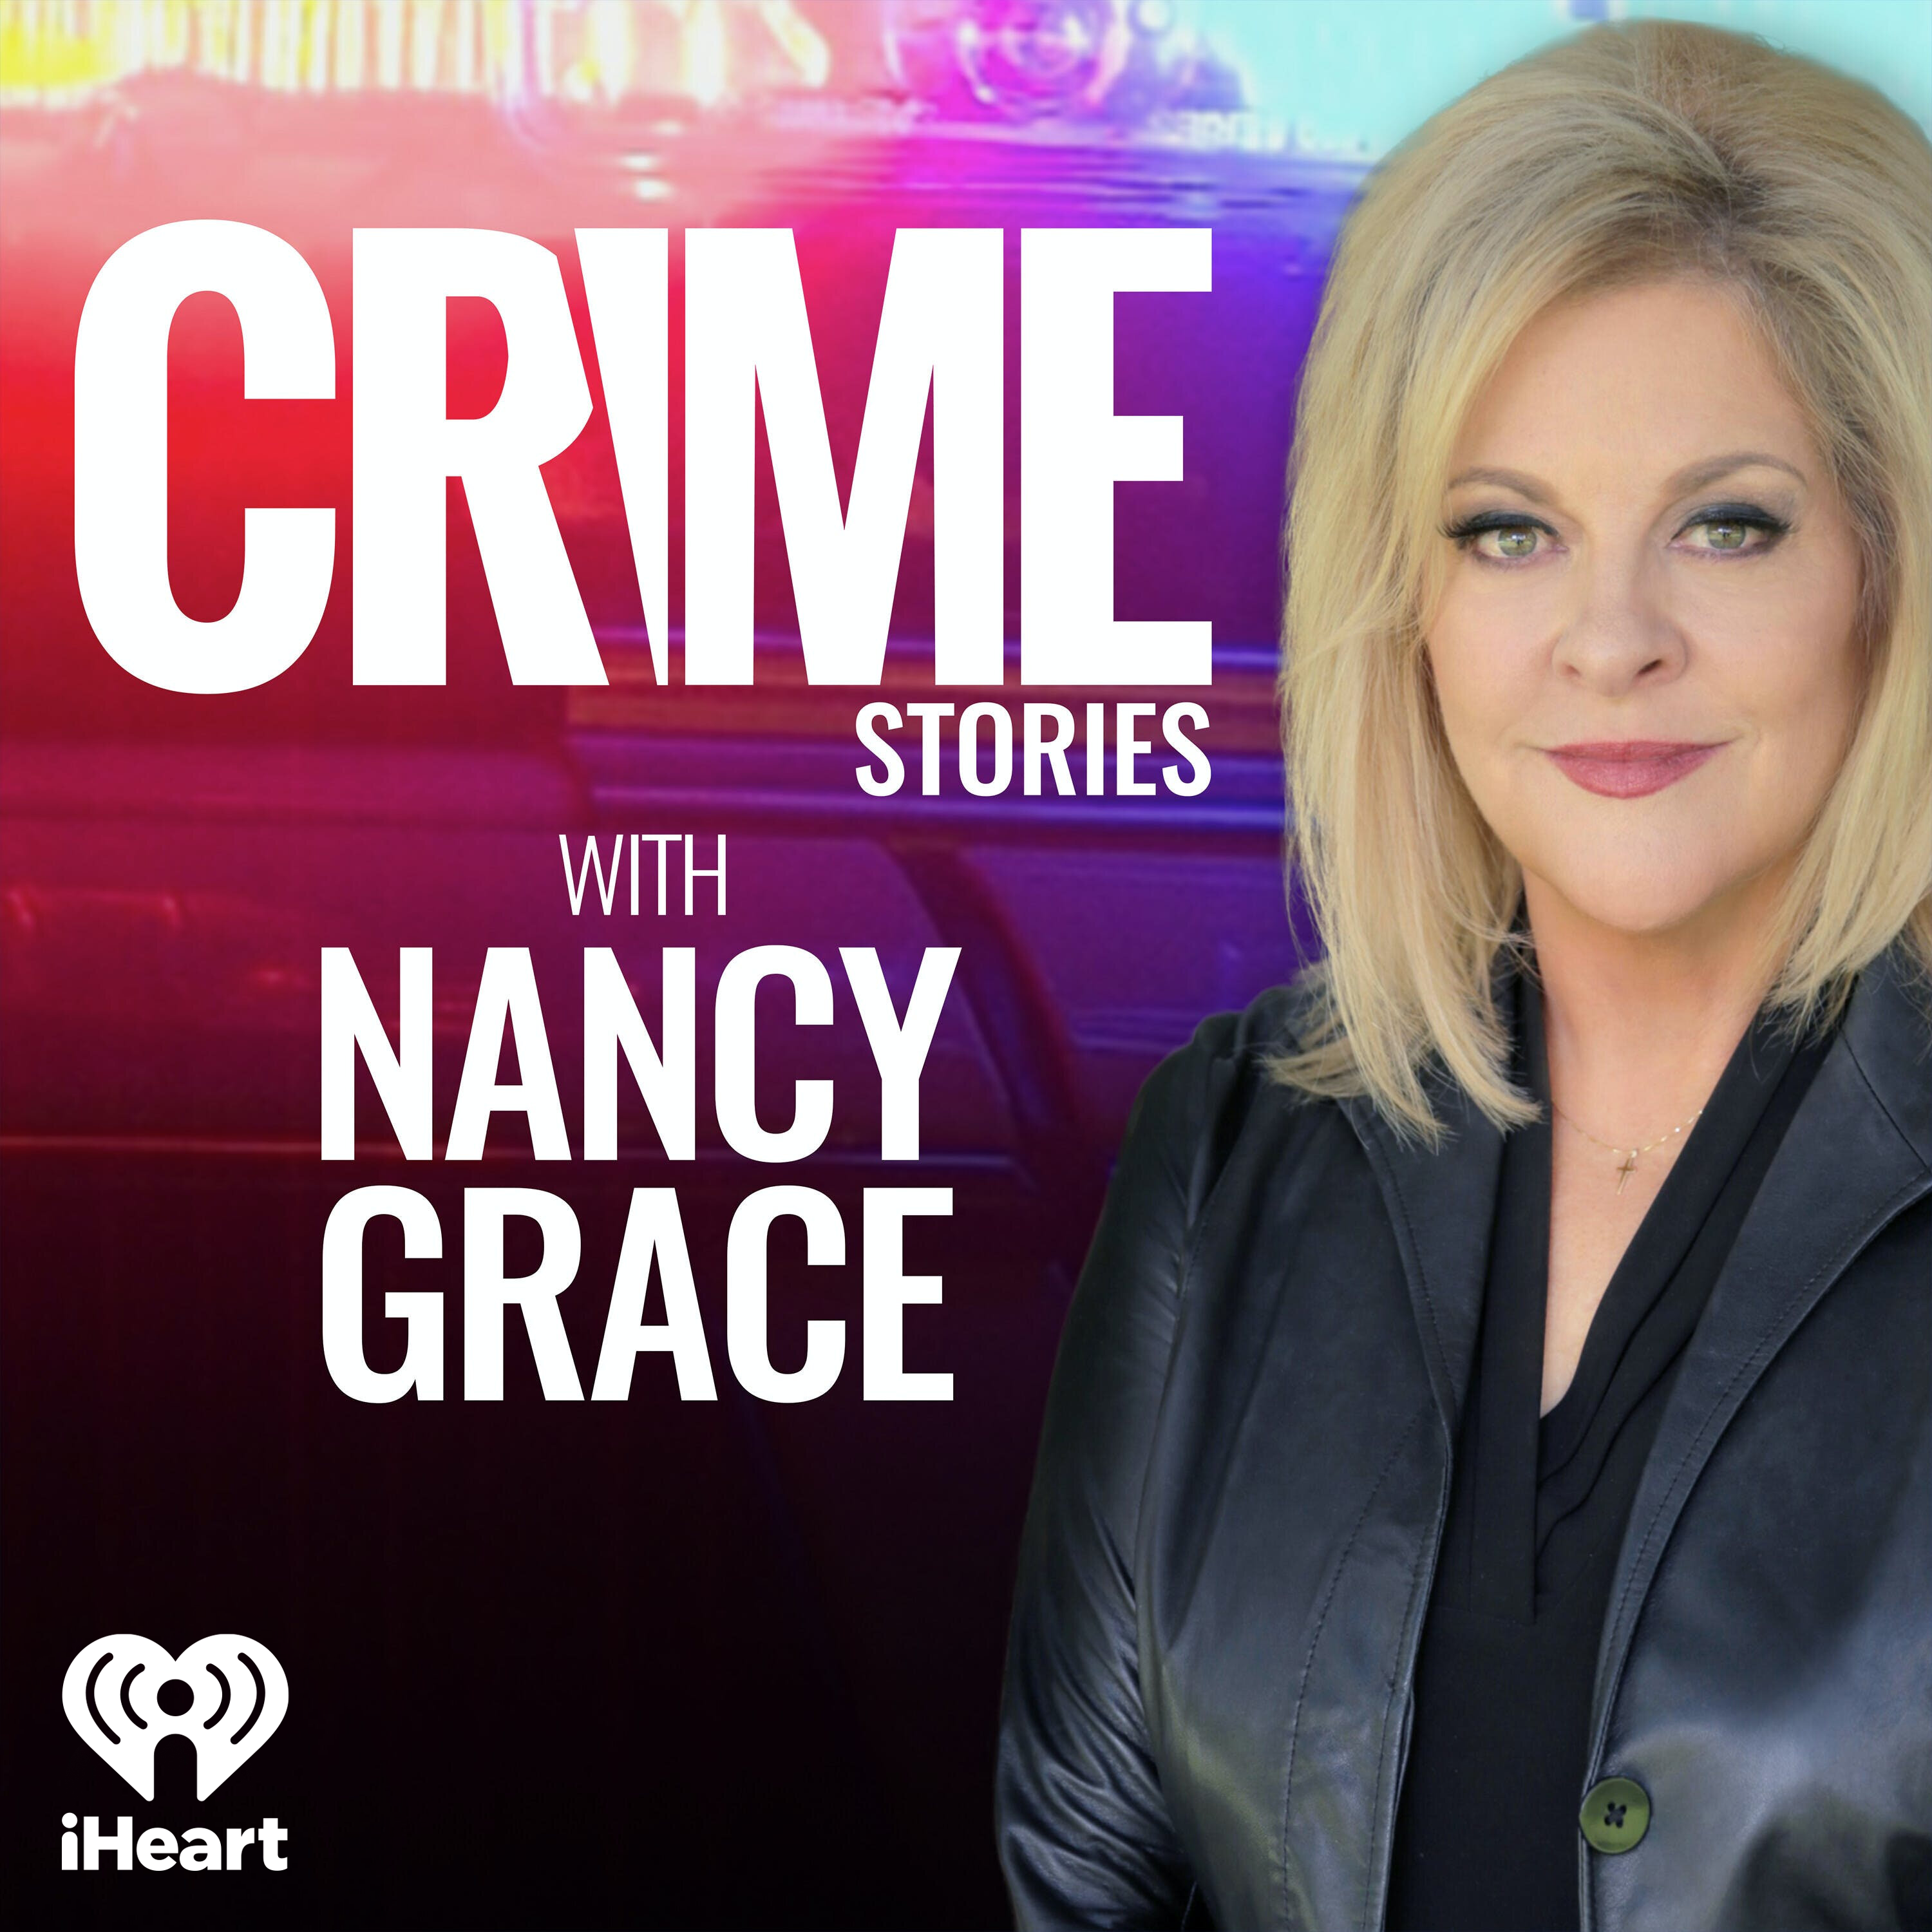 Nancy Grace Episode Entered as Evidence in Crystal Rogers Boyfriend Murder Trial